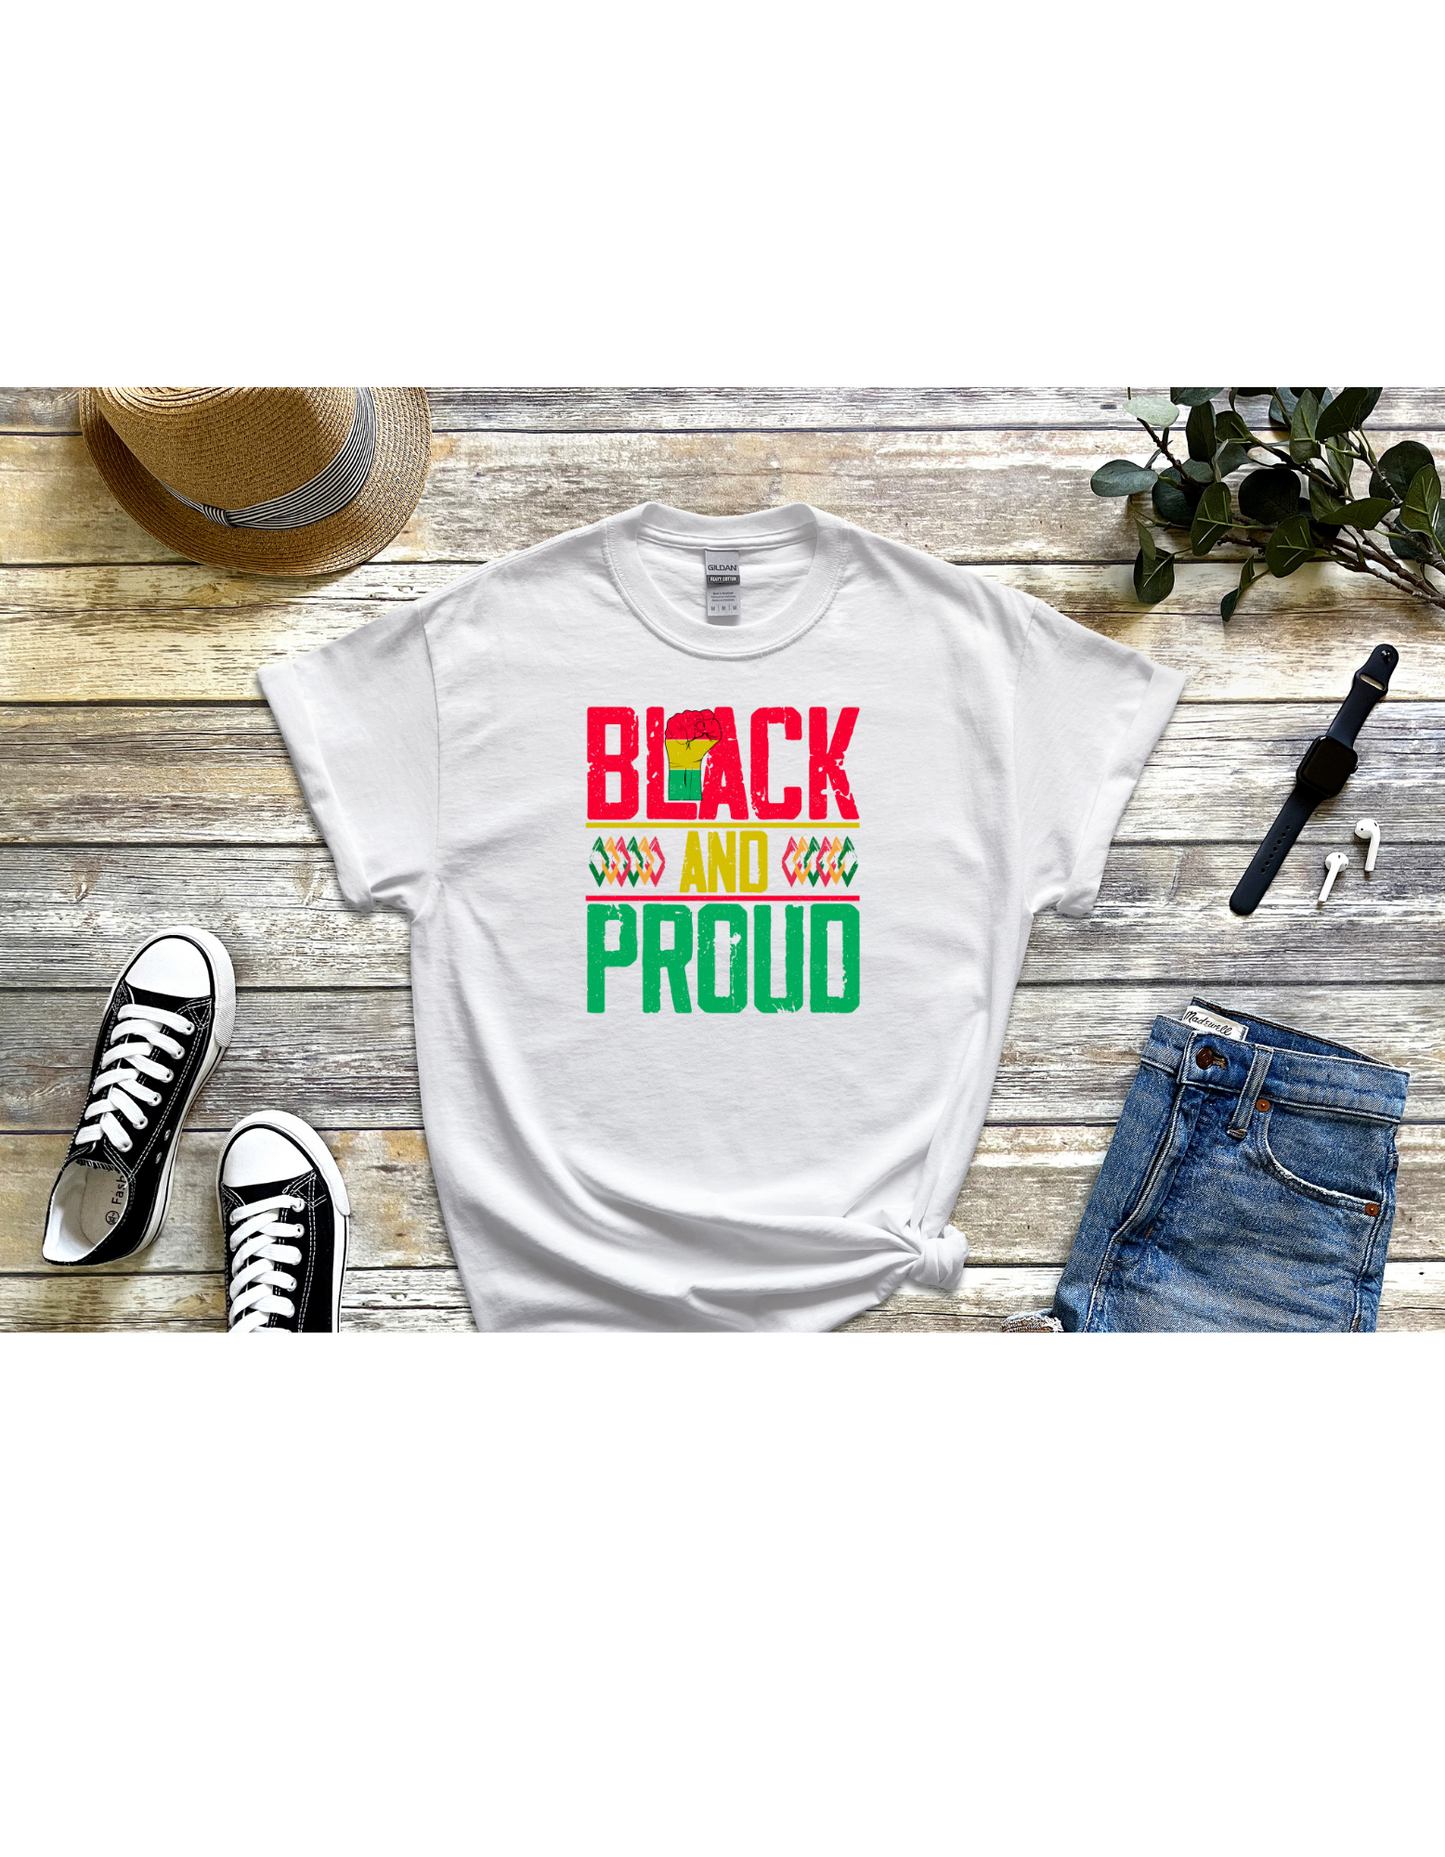 Black And Proud T-Shirt, Black History Shirt, Juneteenth Shirt